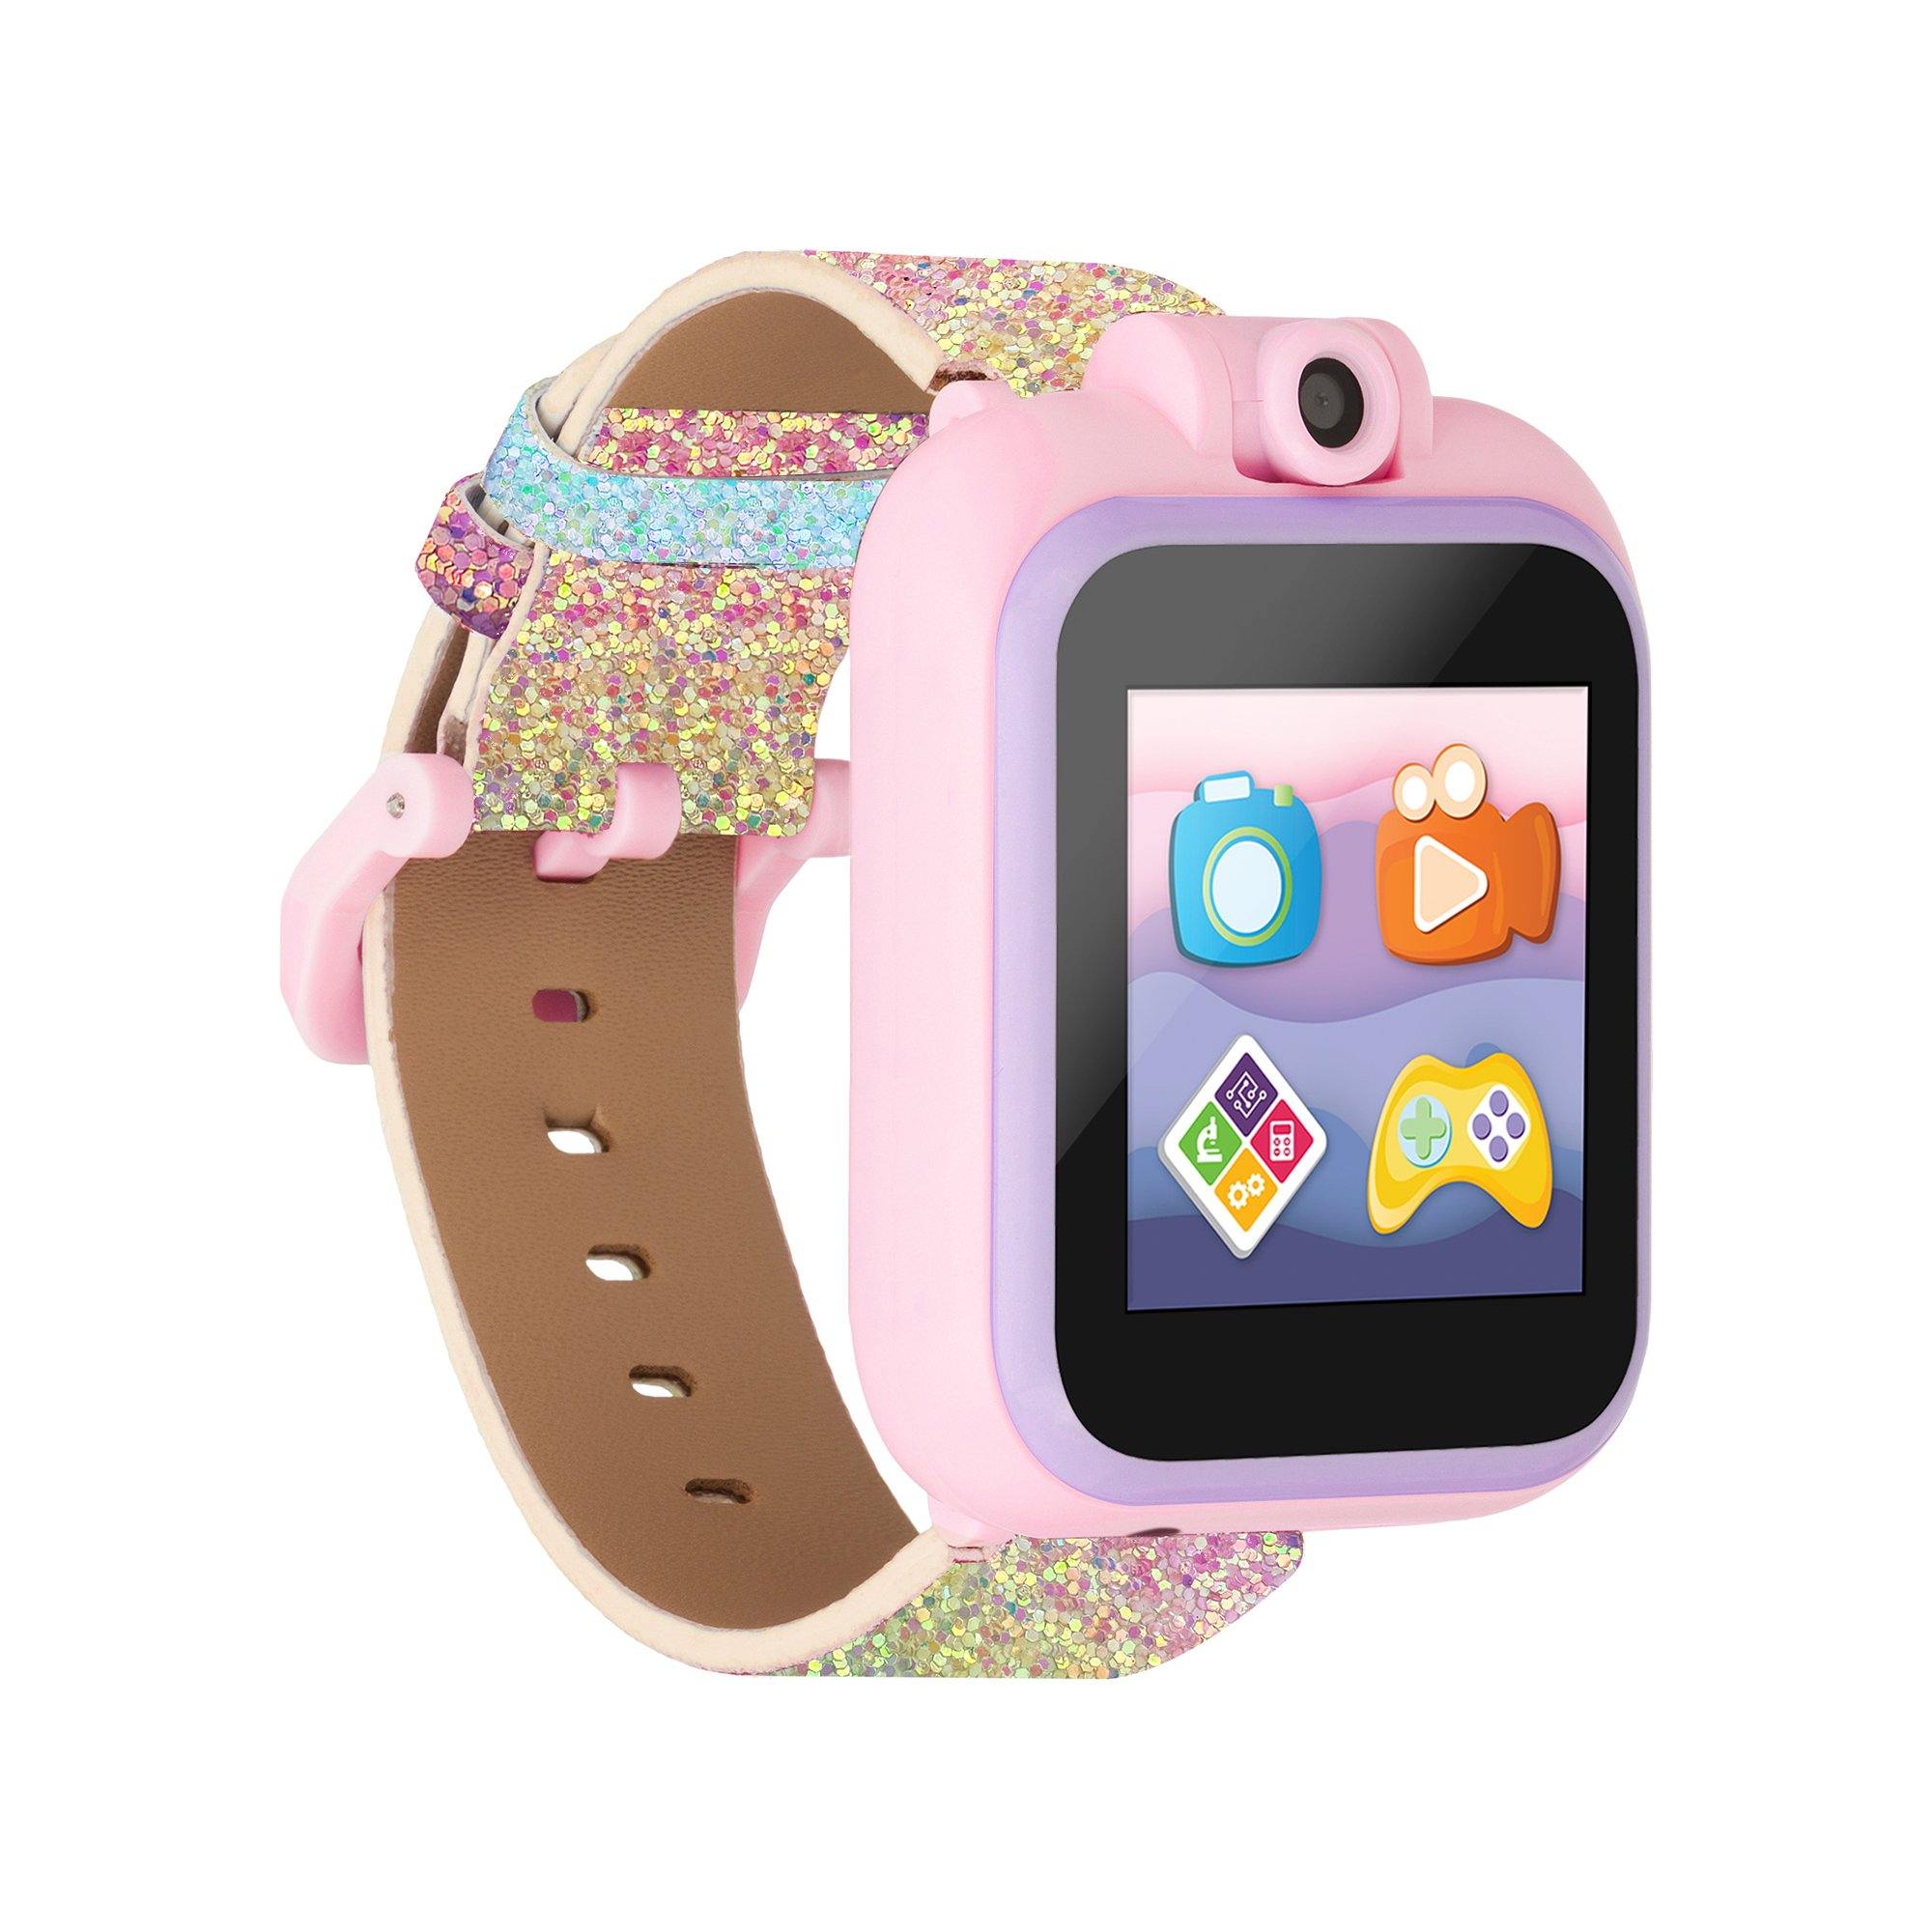 PlayZoom 2 Kids Smartwatch: Textured Rainbow Glitter affordable smart watch